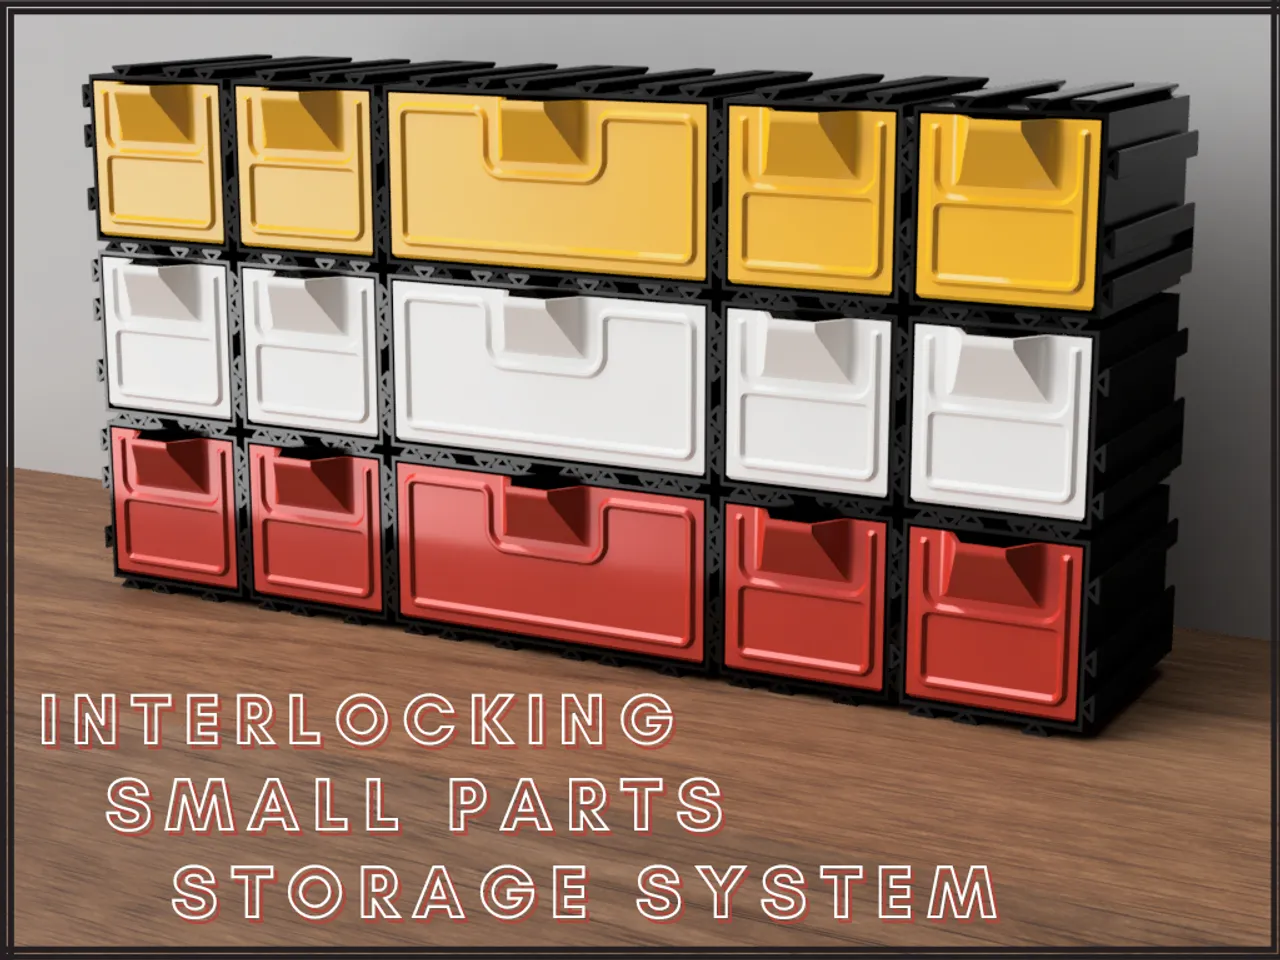 Interlocking Small Parts Storage System by JamesThePrinter